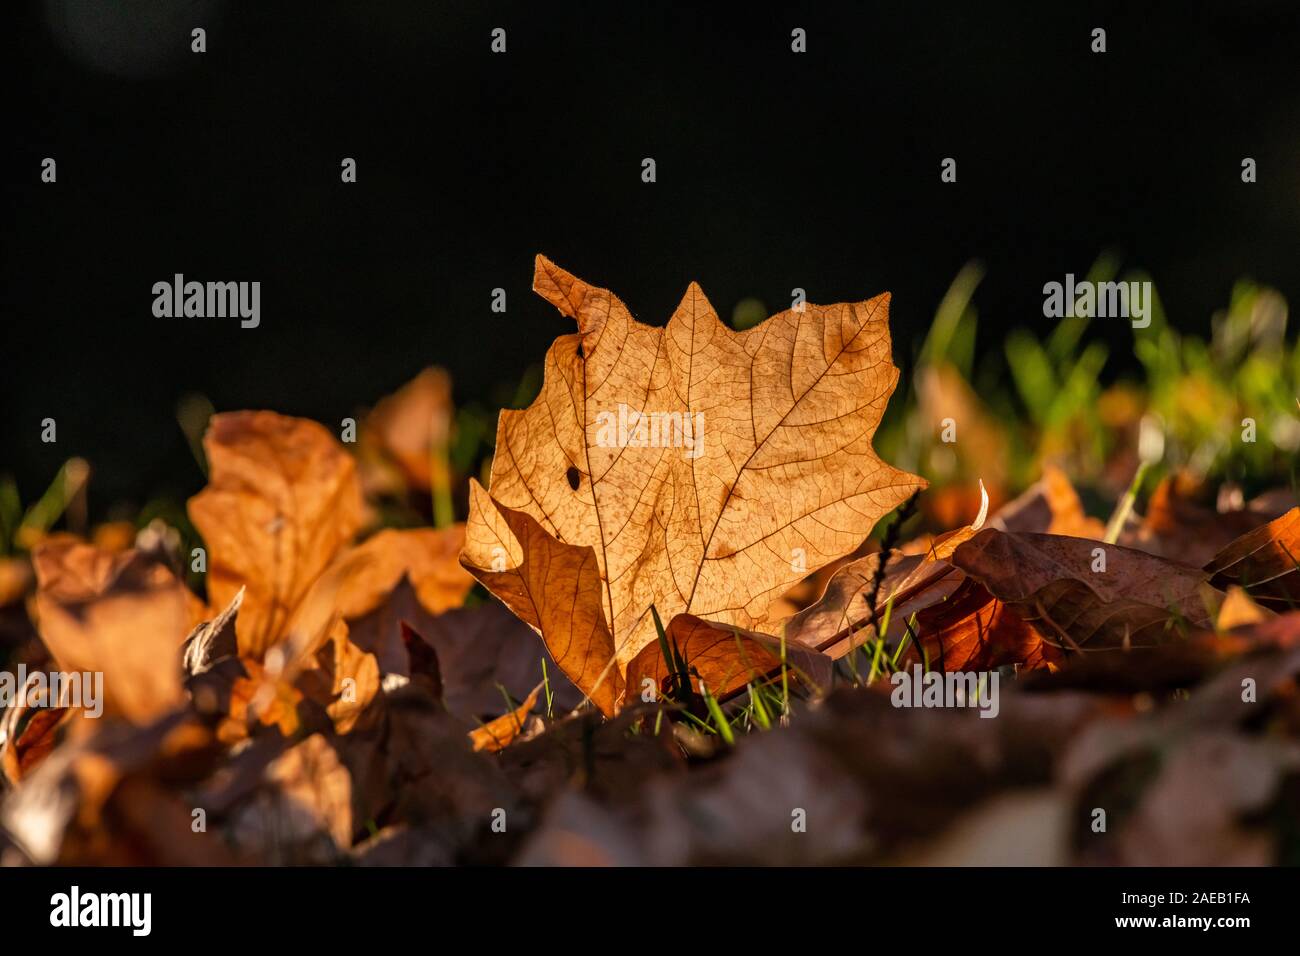 Autumn leaves fallen on the ground Stock Photo